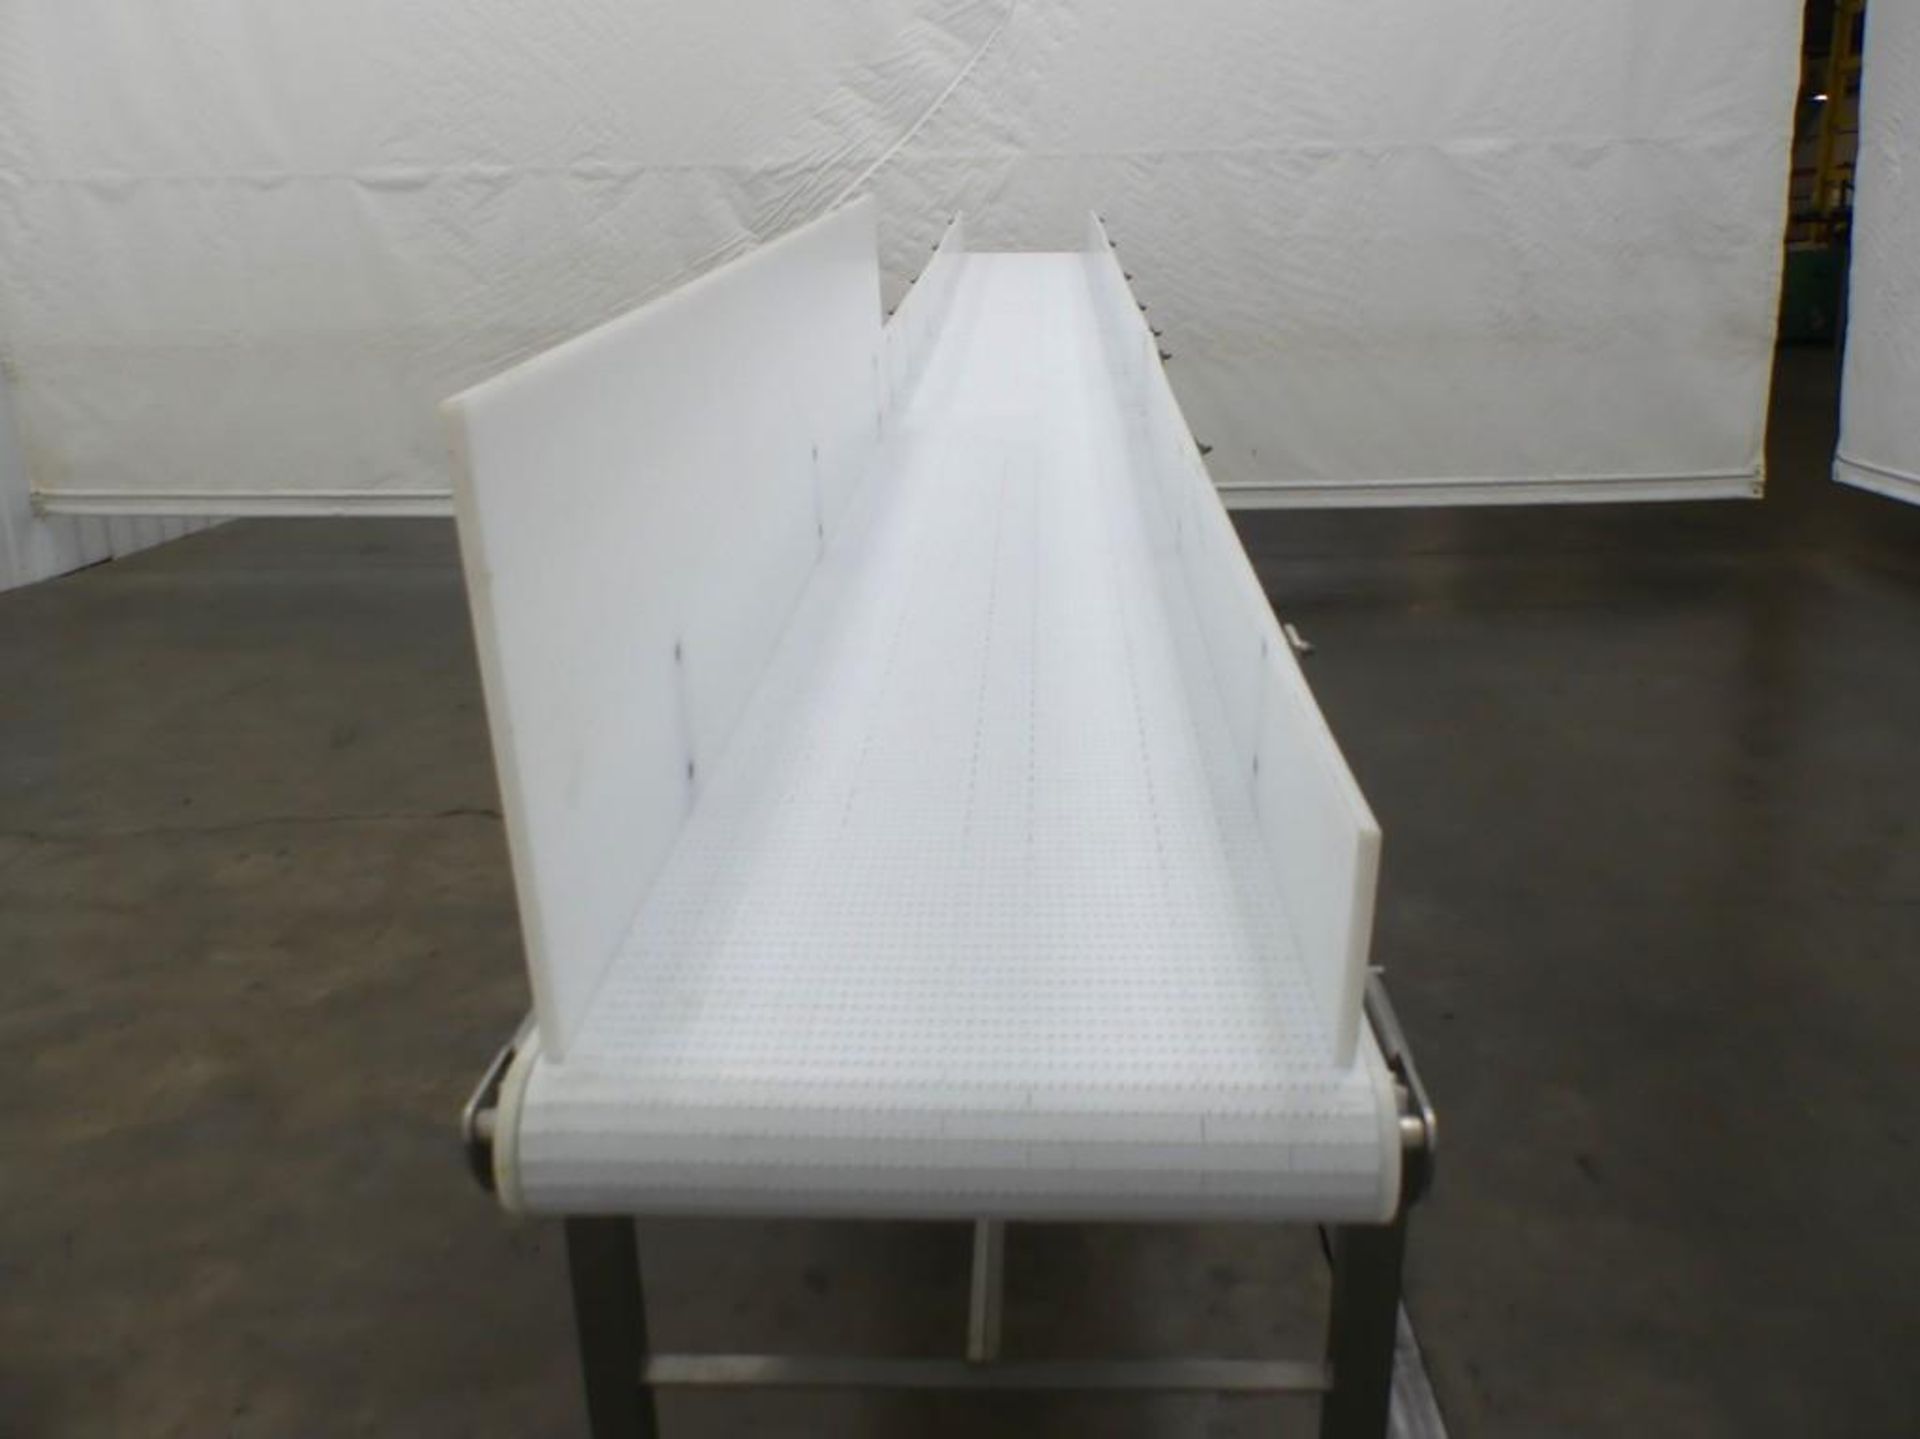 Plastic Mat-Top Interlocked Stainless Steel Conveyor - Image 7 of 14